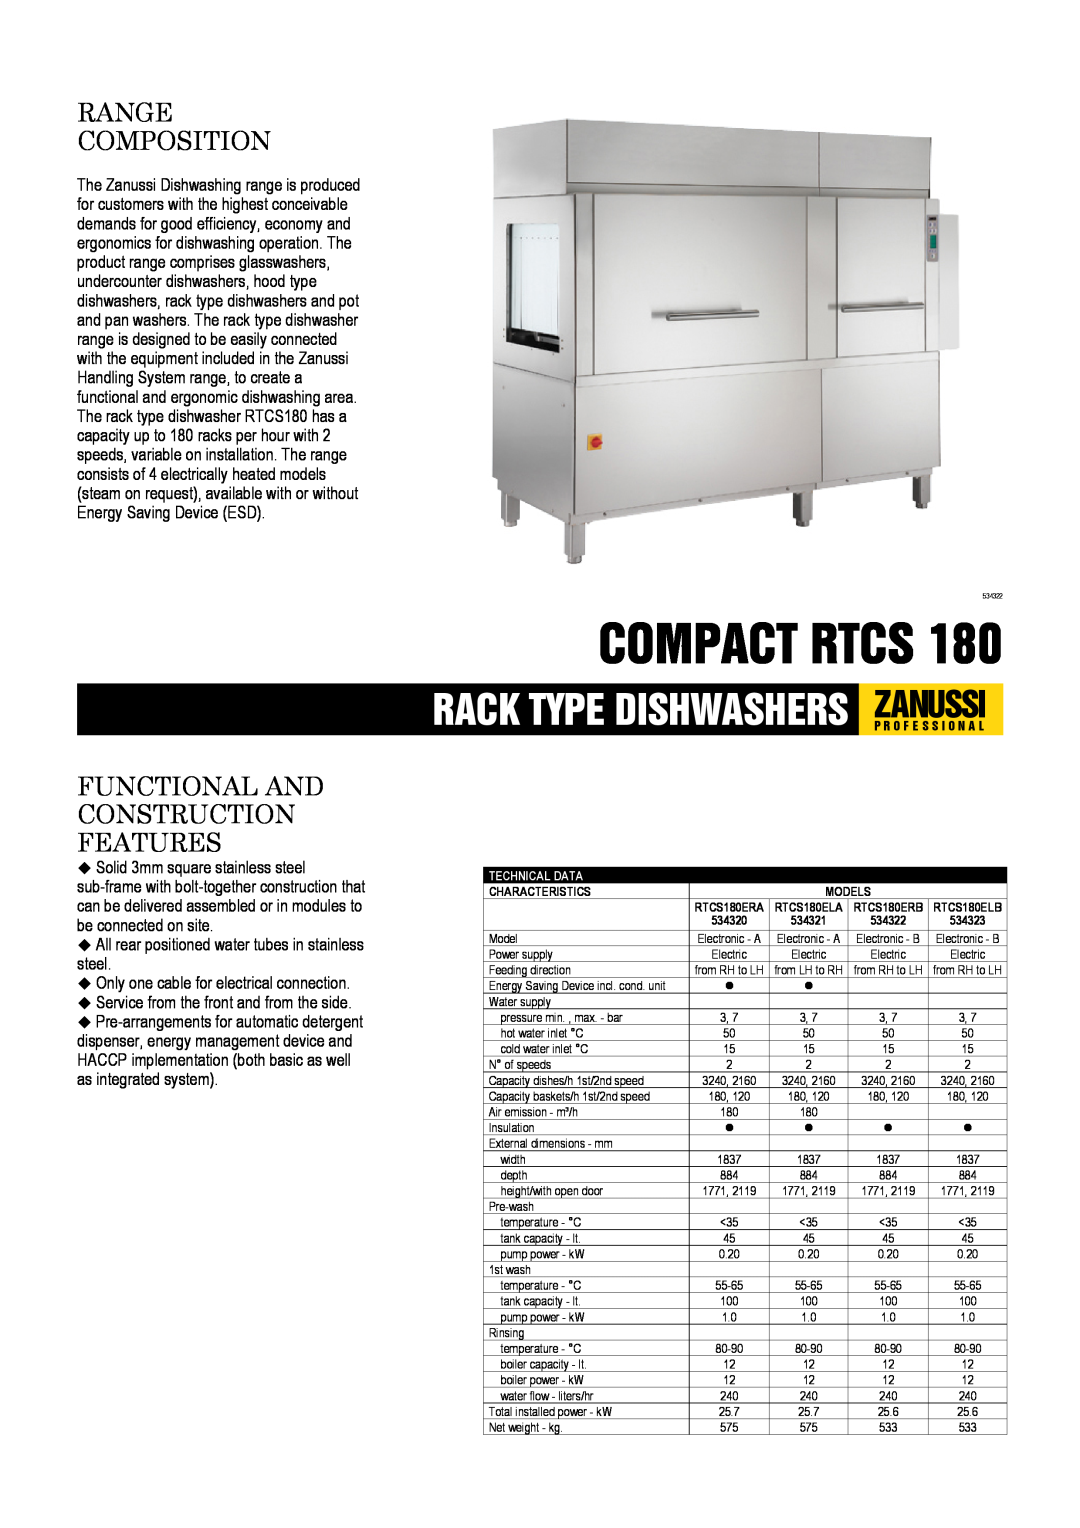 Zanussi RTCS180ELA, RTCS180ERB, RTCS180ERA dimensions Compact Rtcs, Range Composition, Functional And Construction Features 